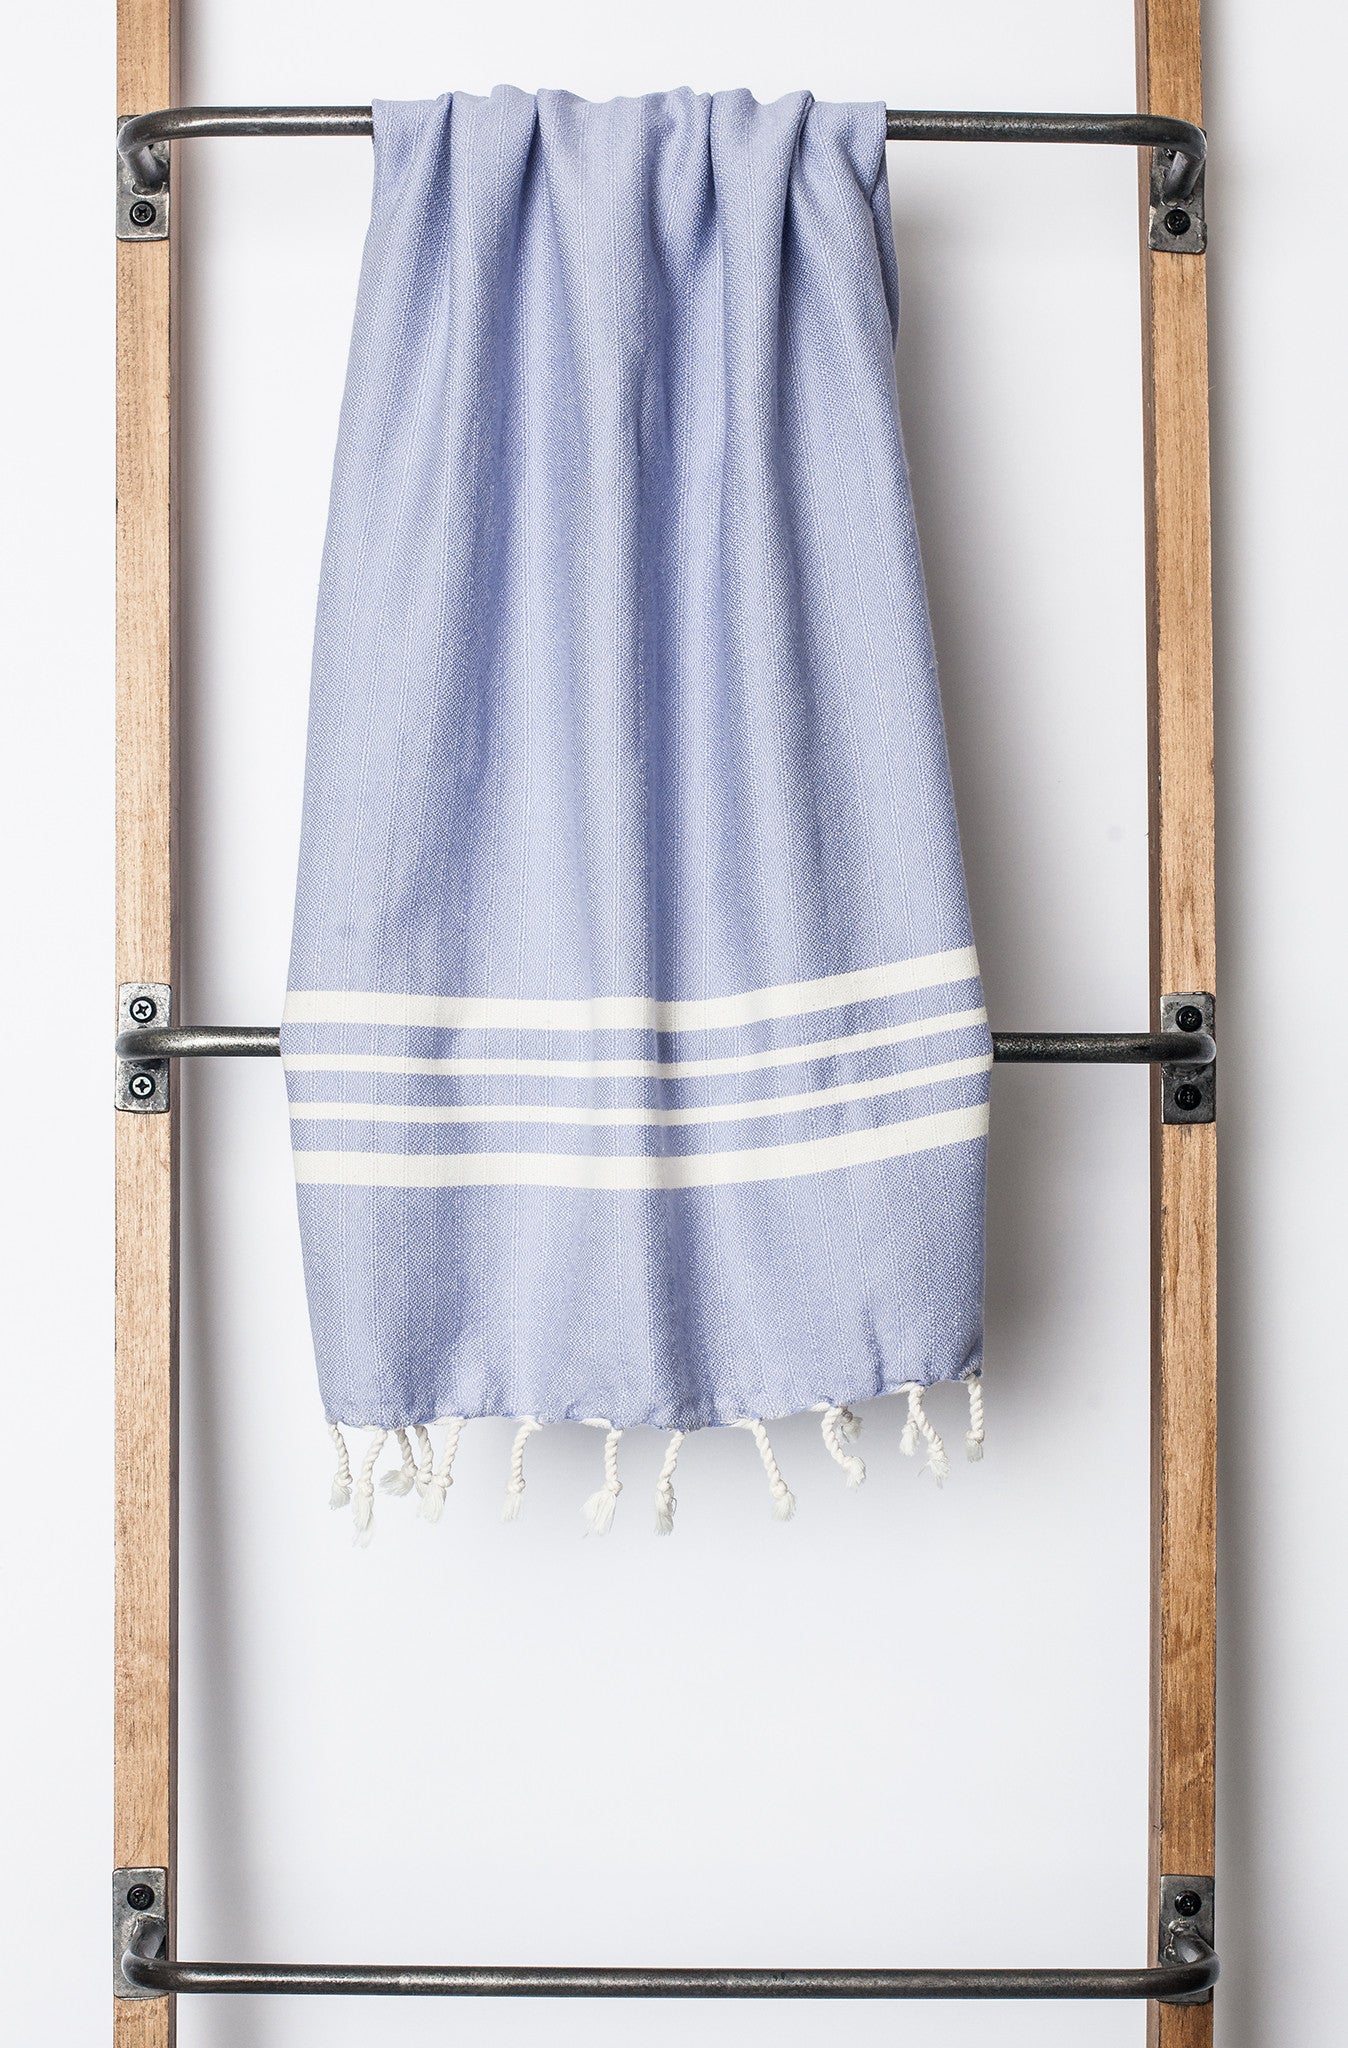 StyleWell Turkish Cotton White and Stone Gray Stripe 18-Piece Fringe Bath Towel Set